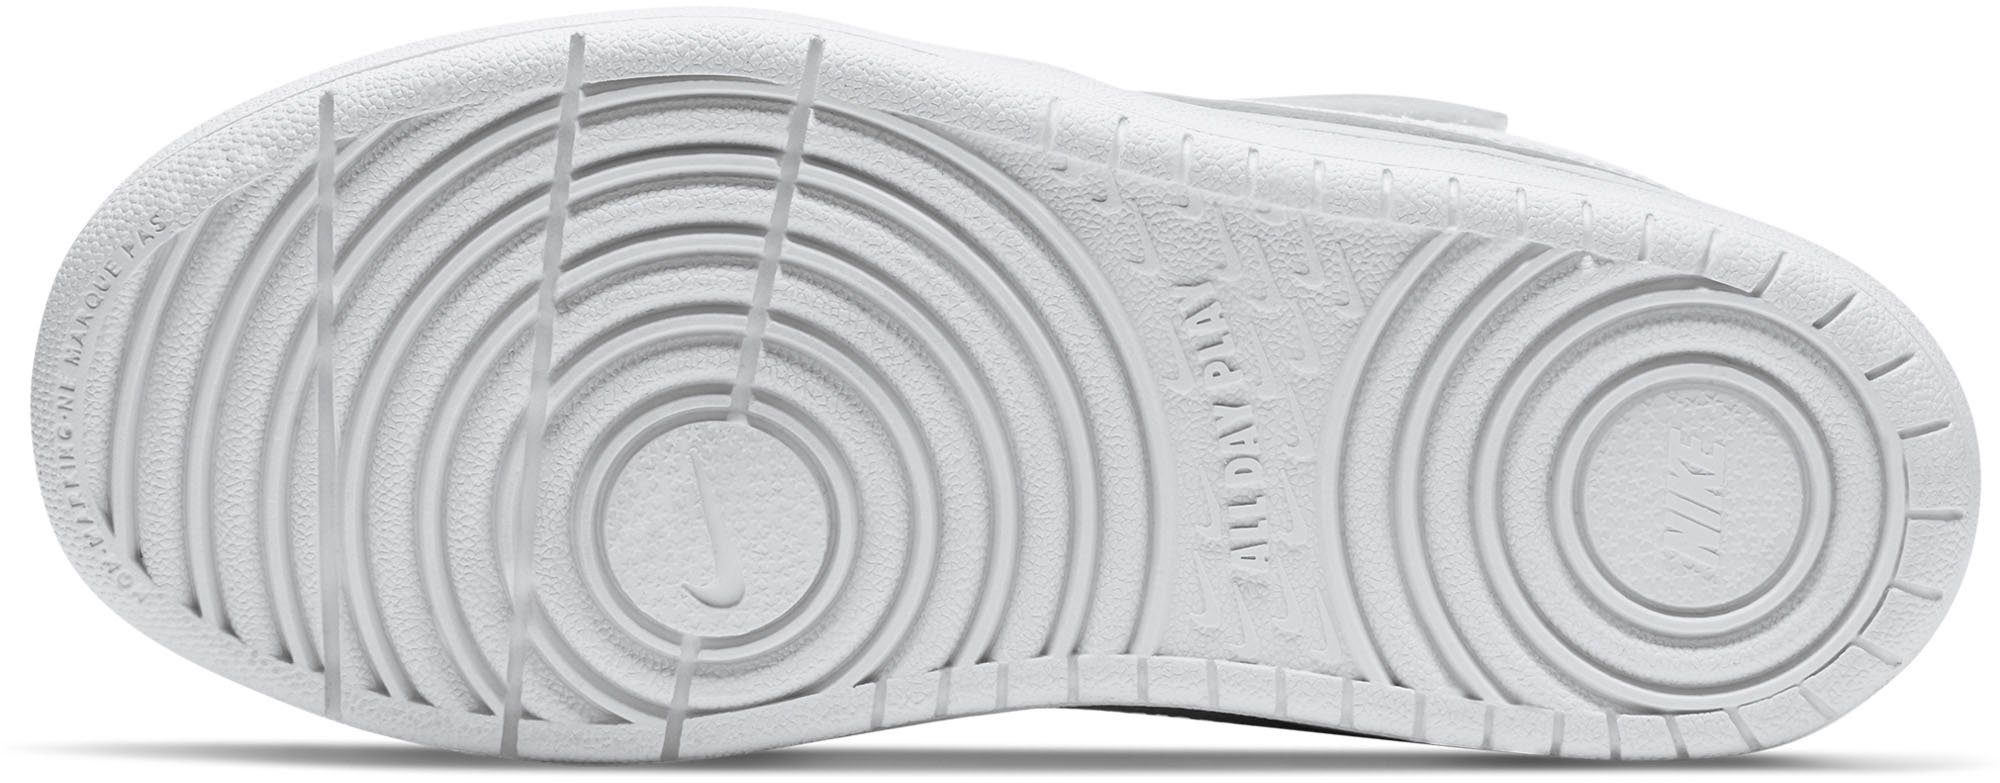 Spuren des den Sportswear COURT BOROUGH Force LOW Design Sneaker 1 auf Air Nike 2